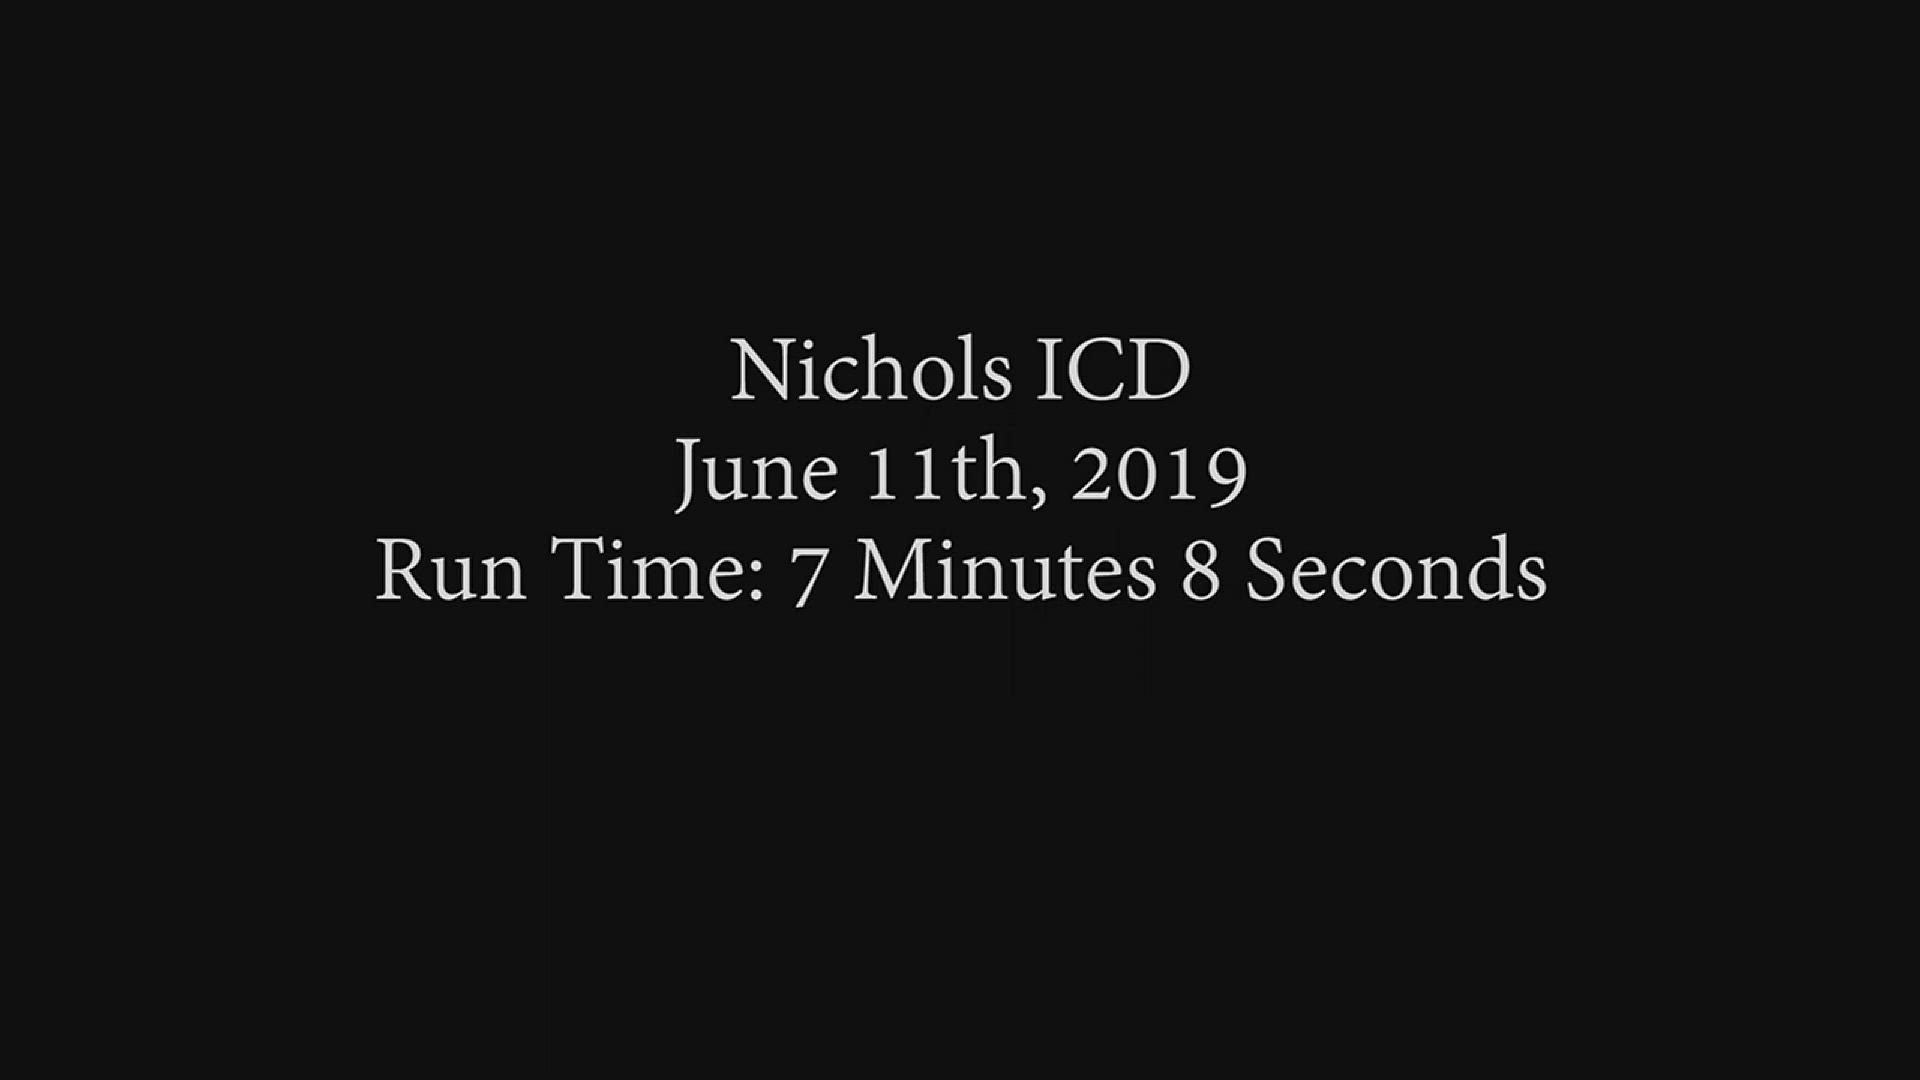 Police video from June 11, 2019 in-custody death of Buddy Nichols